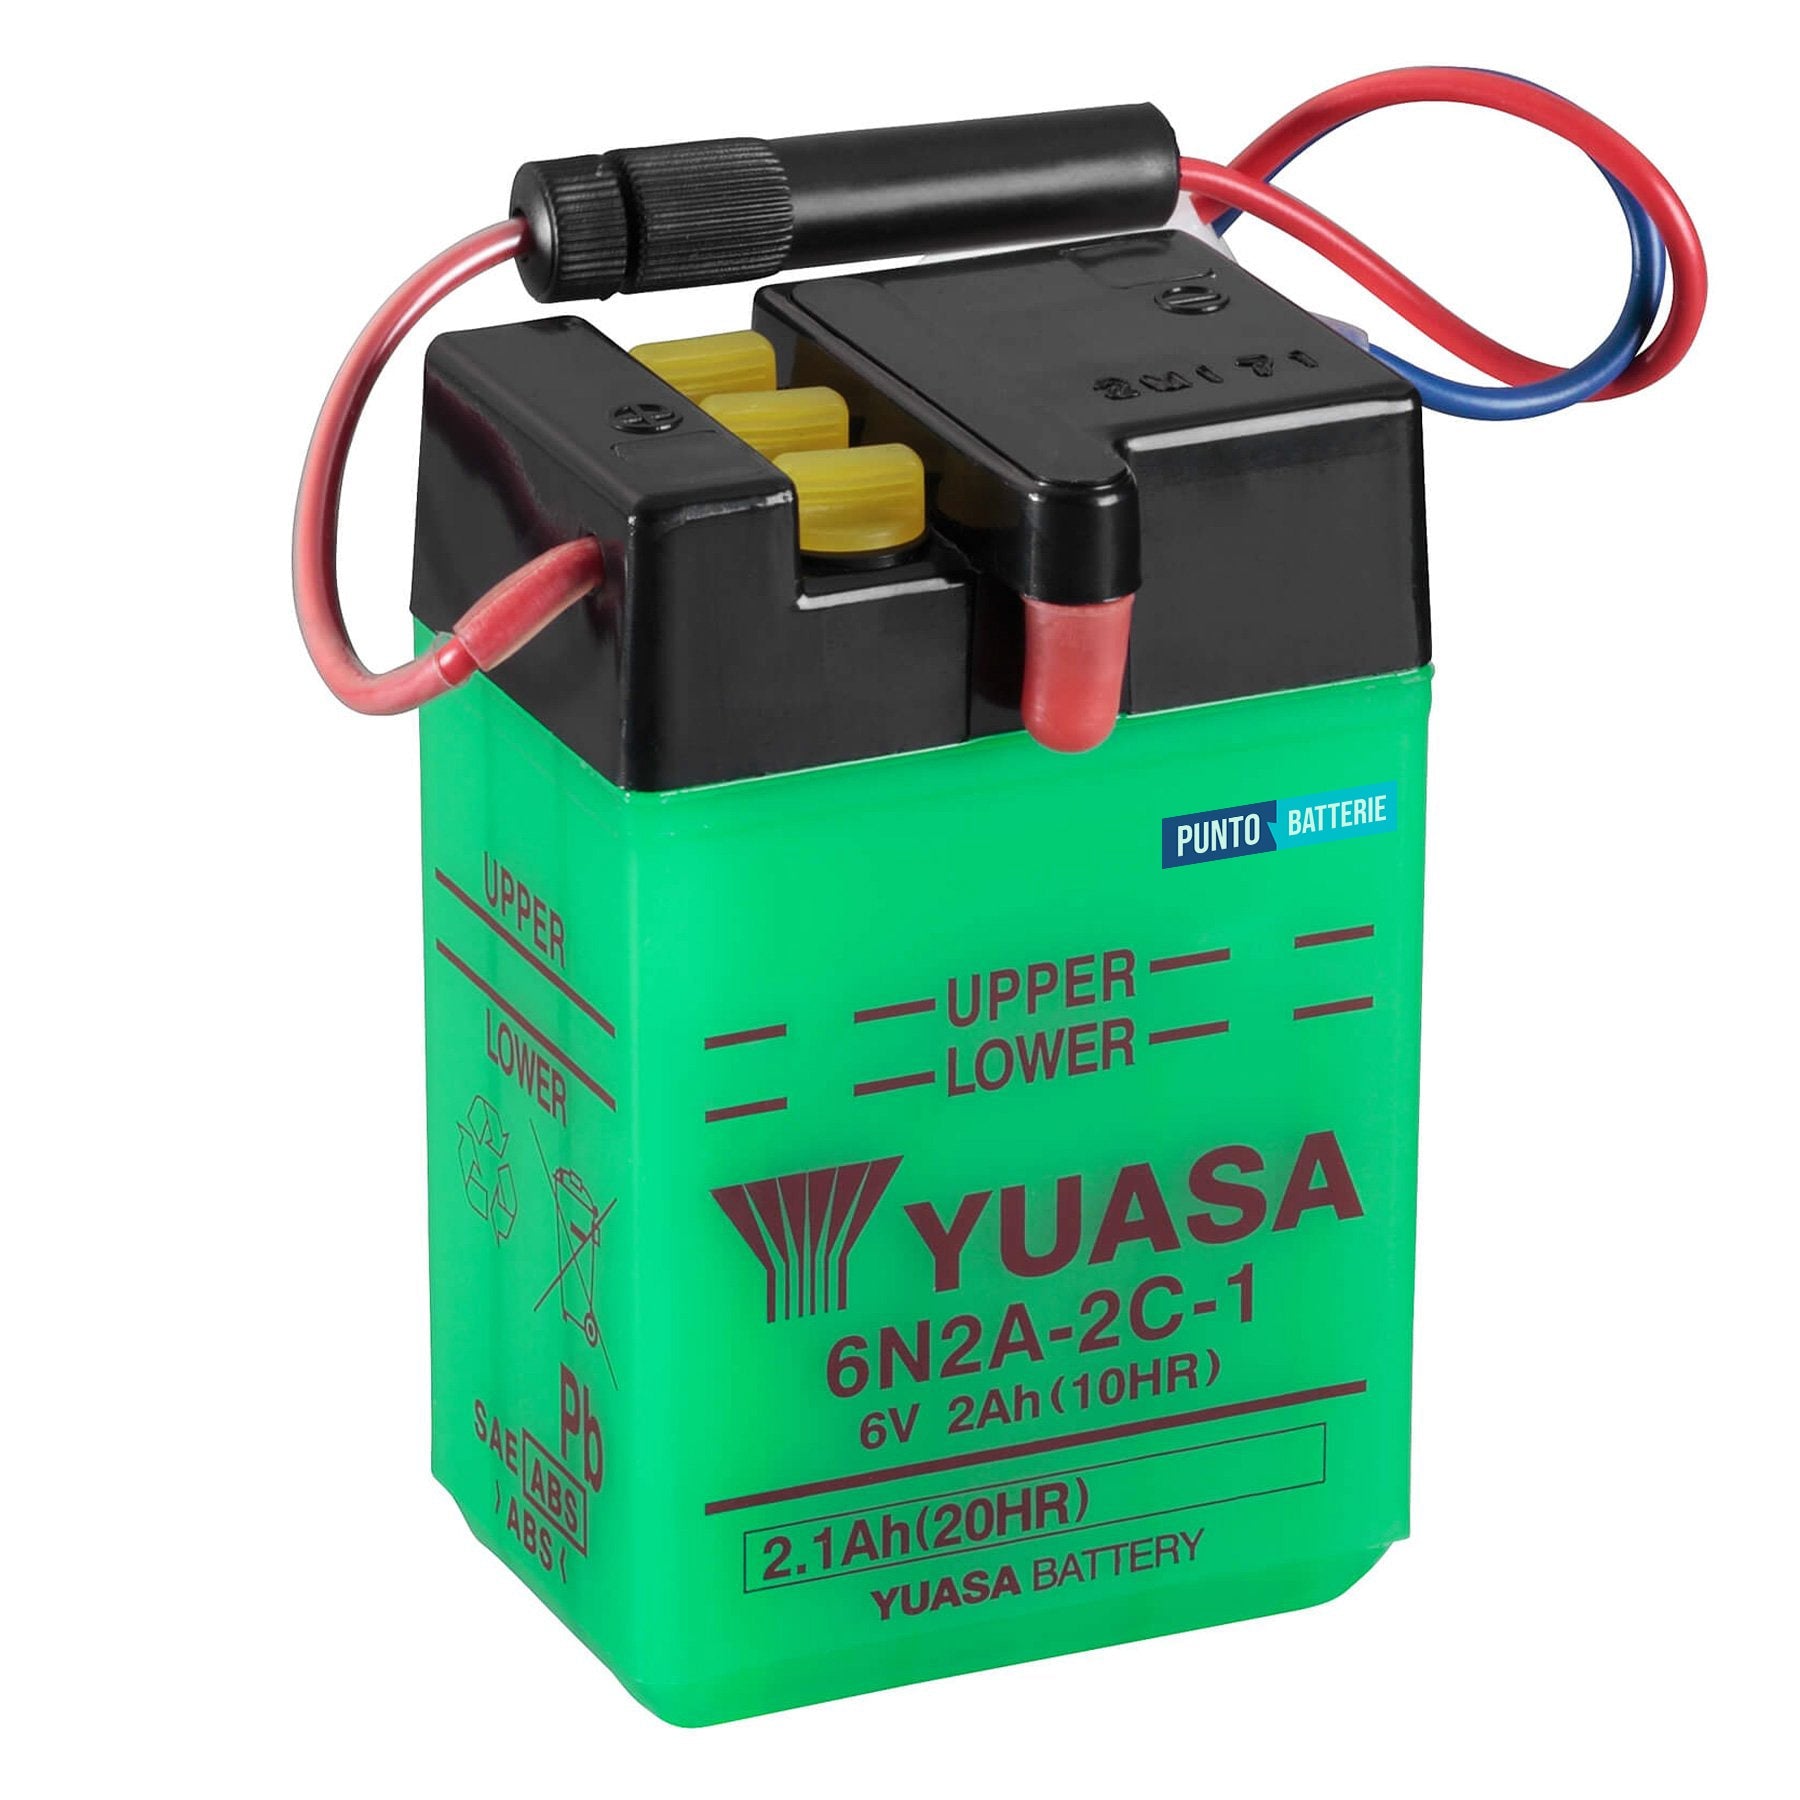 Batteria originale Yuasa Conventional 6N2A-2C-1, dimensioni 70 x 47 x 106, polo positivo a s